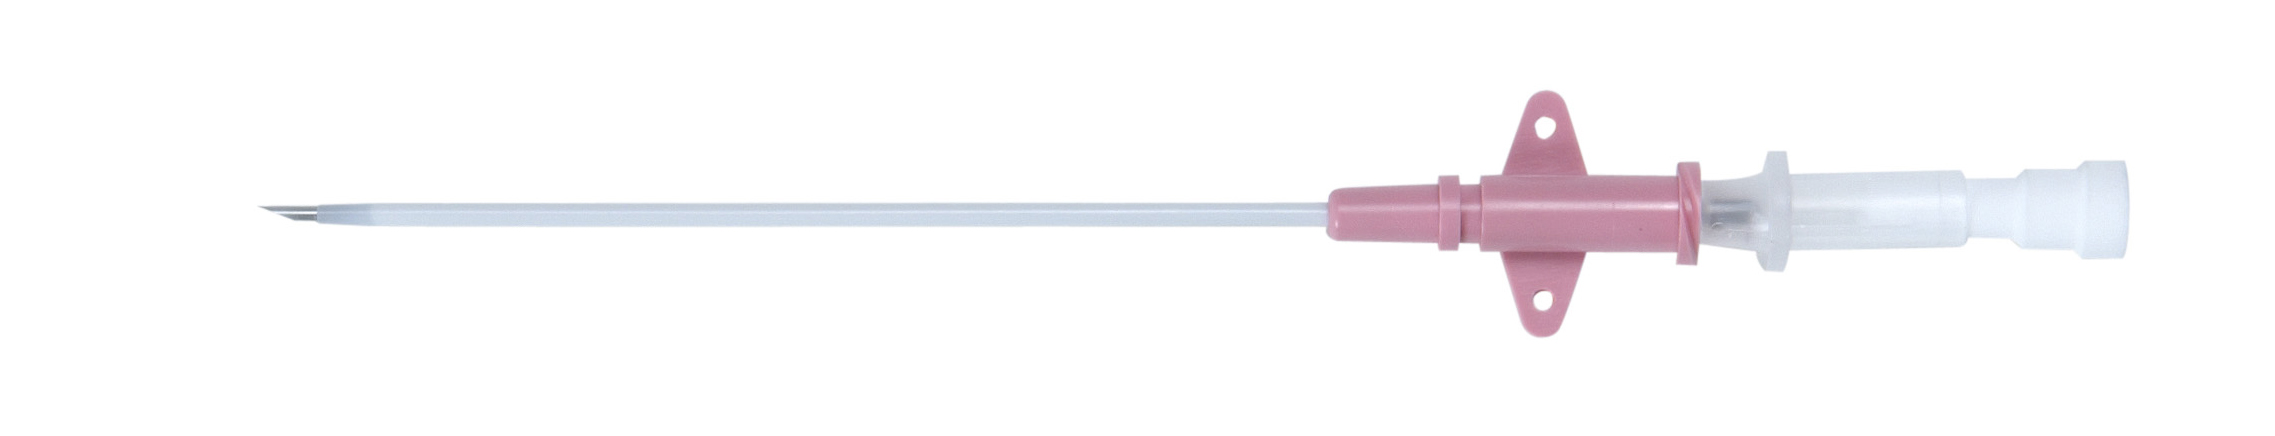 EQUIVET HiFlow long-term IV catheter 16G x 3.00, 10/pk